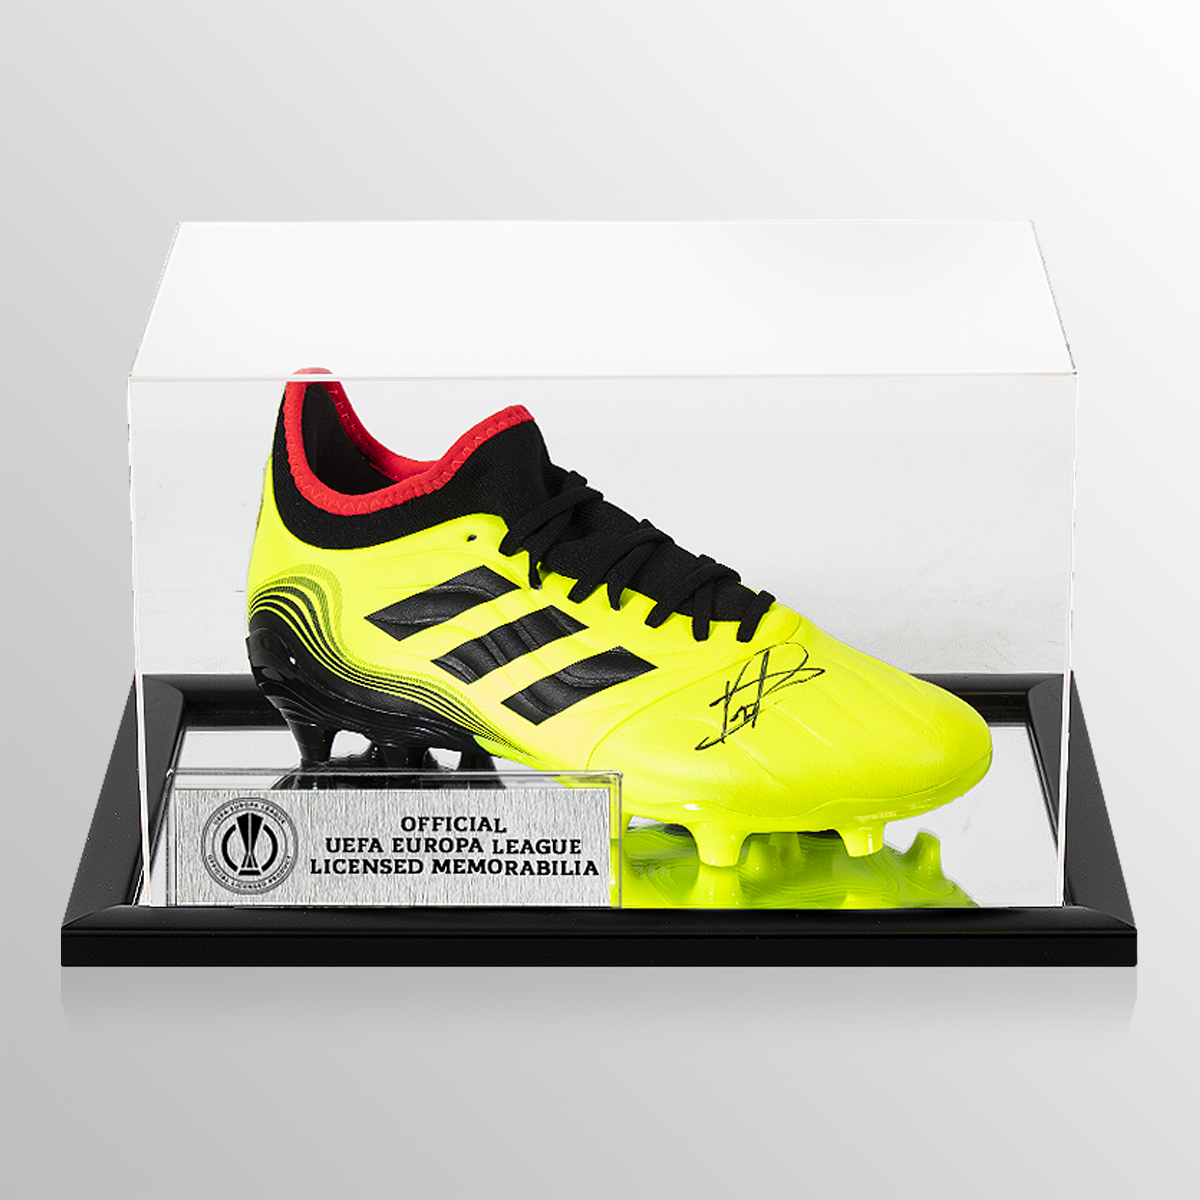 Pedri Offizieller signierter gelber Adidas Copa Sense .3 FG-Schuh der UEFA Europa League in Acrylhülle